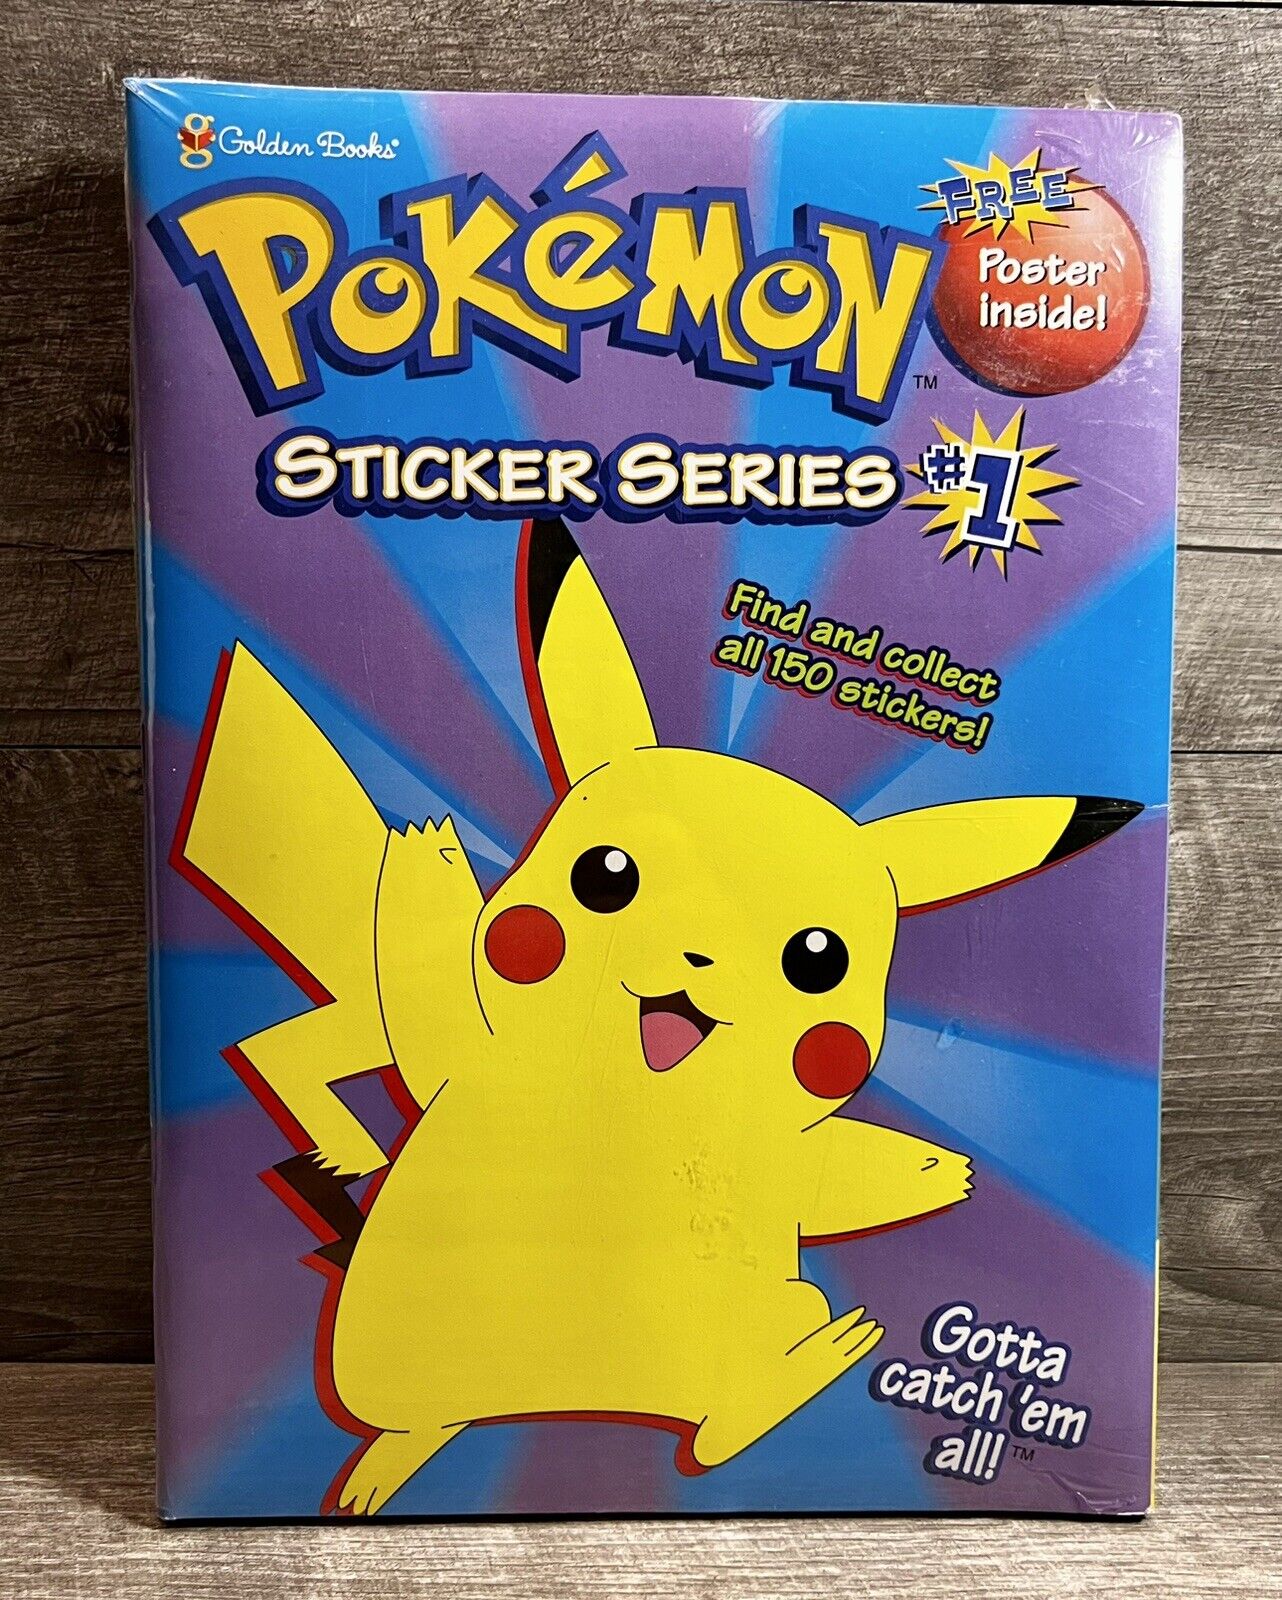 1999 Pokémon Sticker Series 1-3 & Tattoo Series 1-3 Albums Charizard Pikachu New